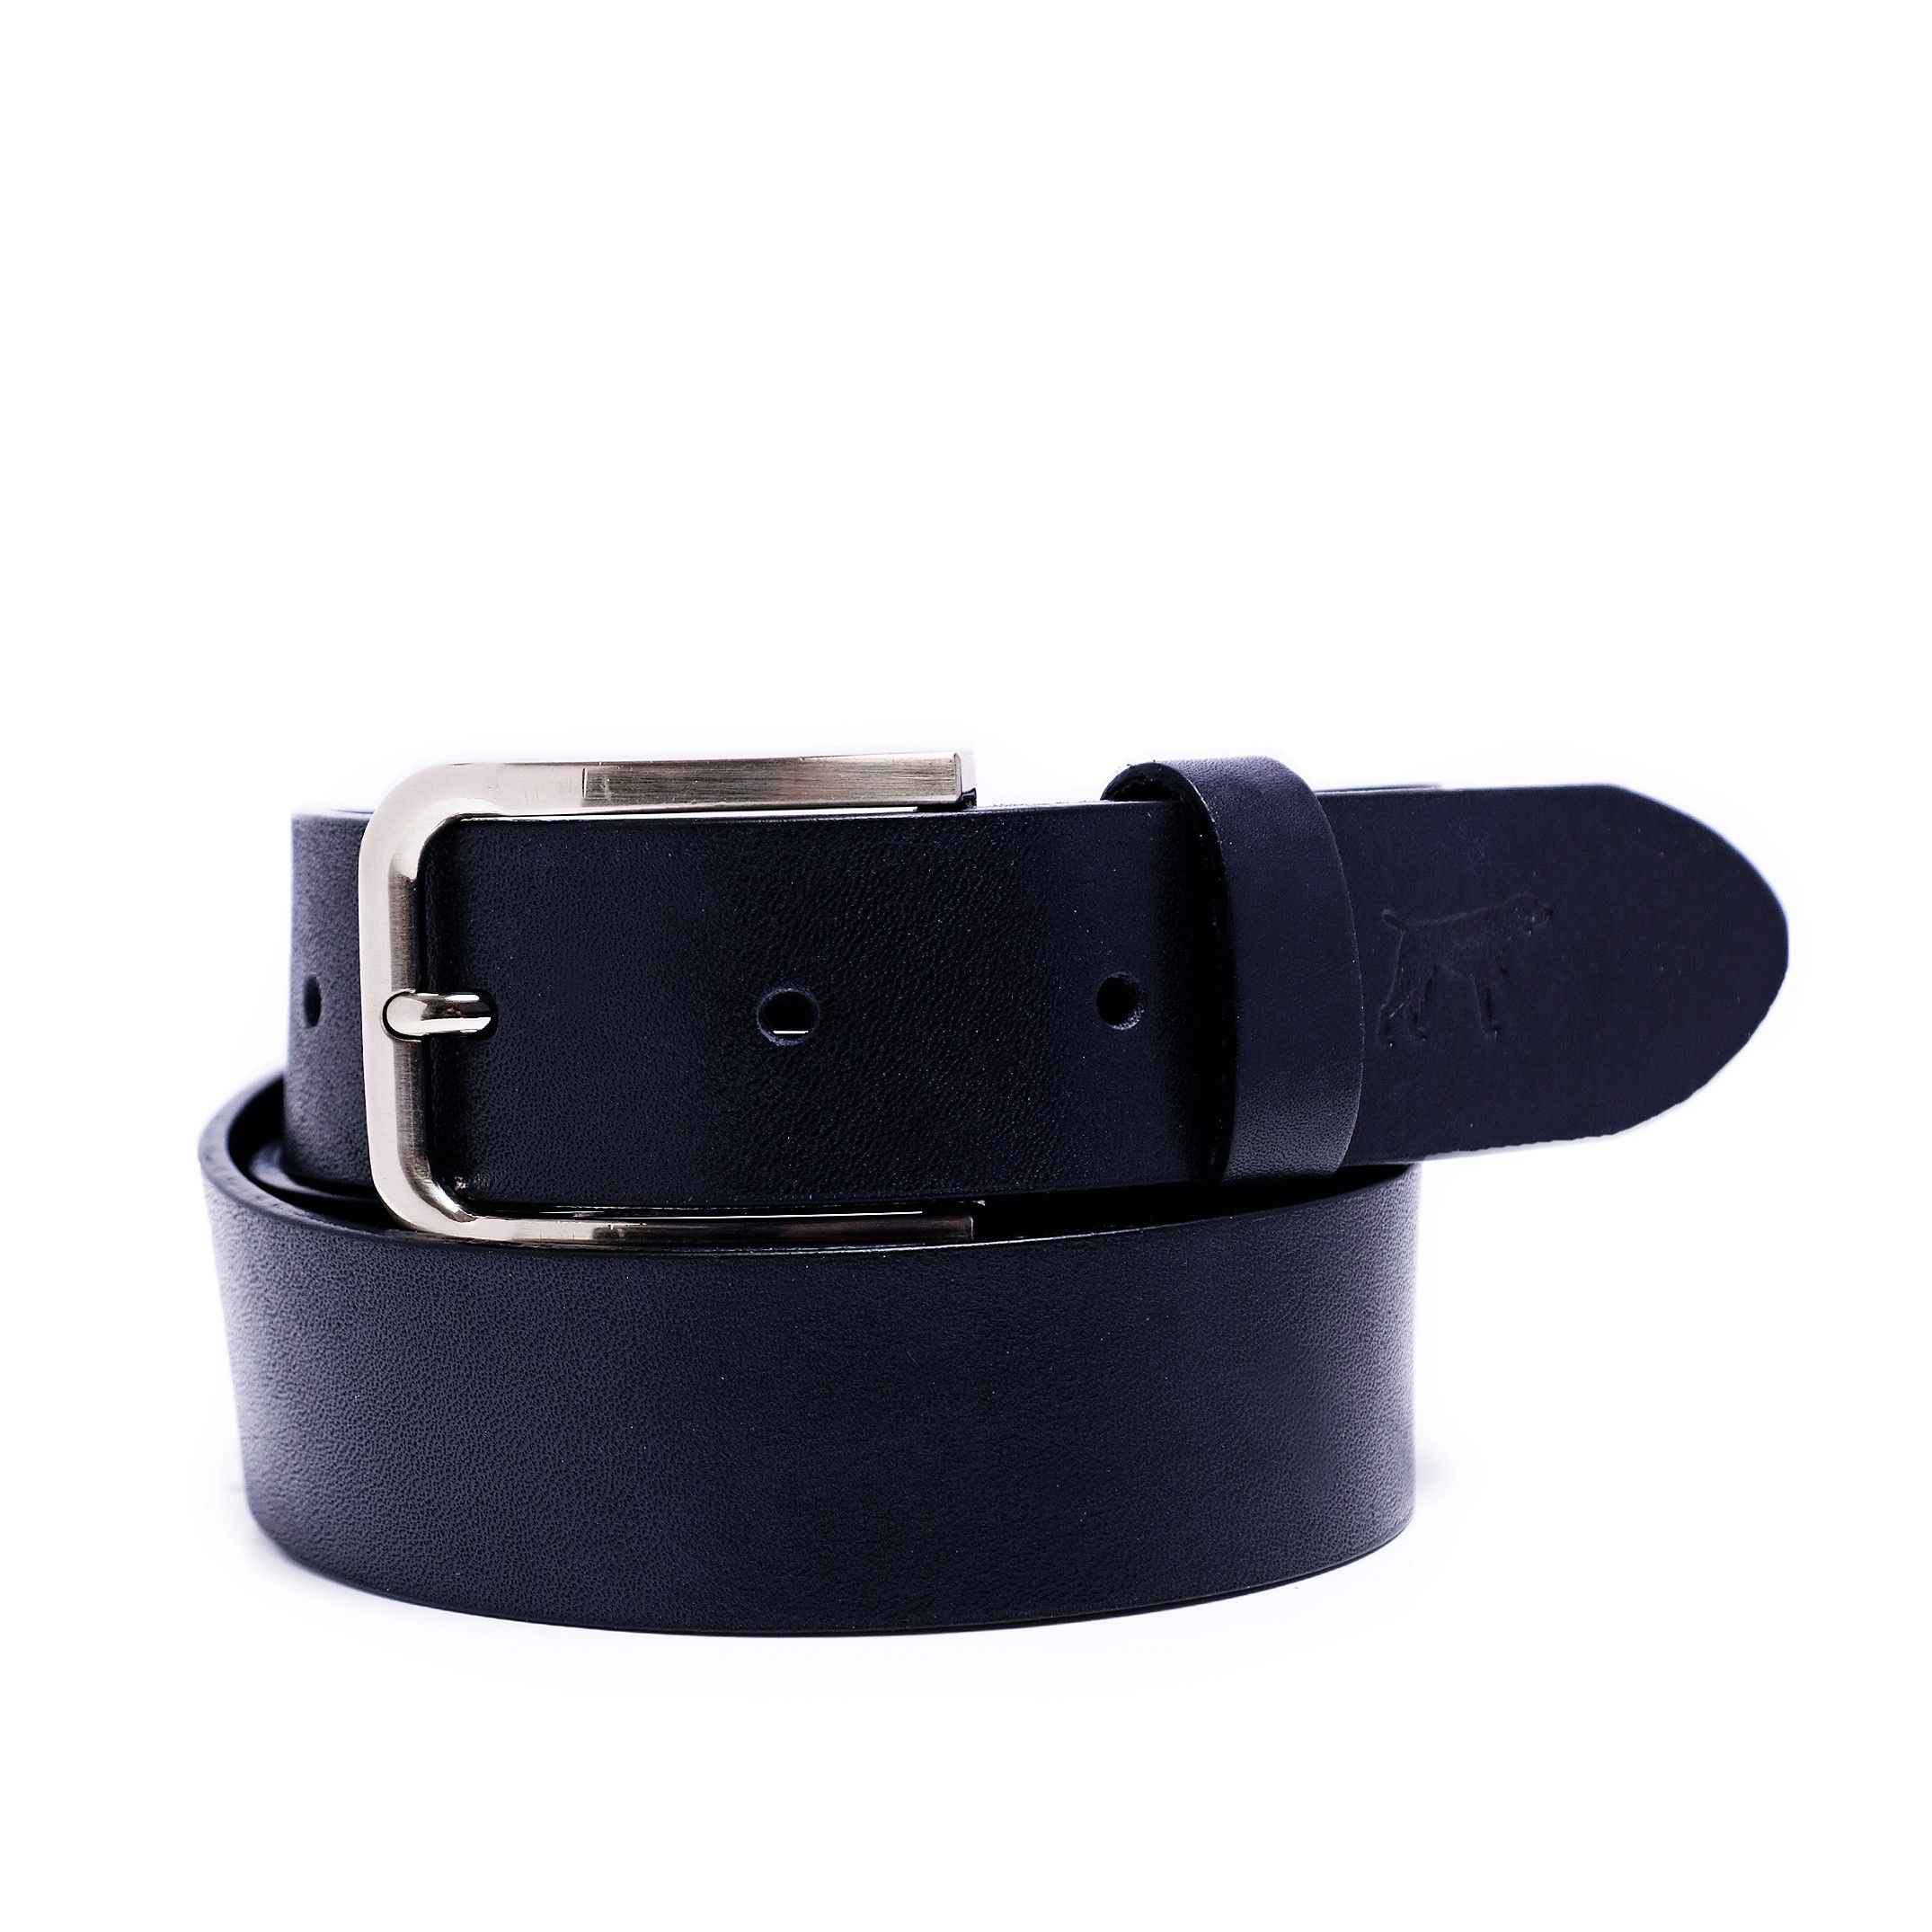 Castellanisimos men's leather belt. Metal buckle. Width: 3,5cm. MADE IN SPAIN.